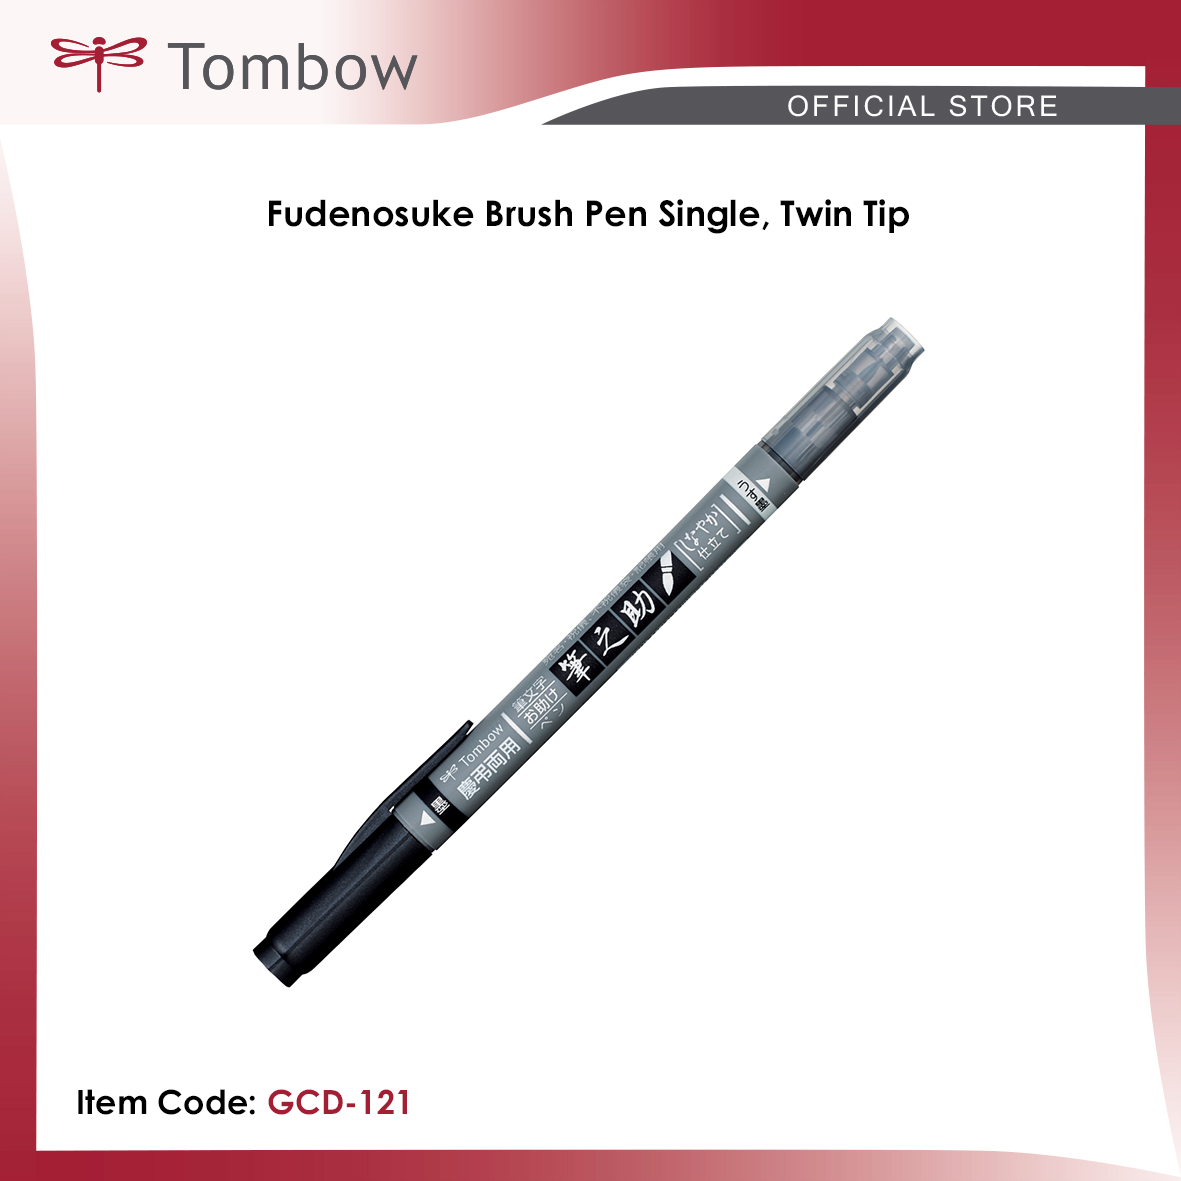 Fudenosuke Brush Pen Dual Tip Black/Gray